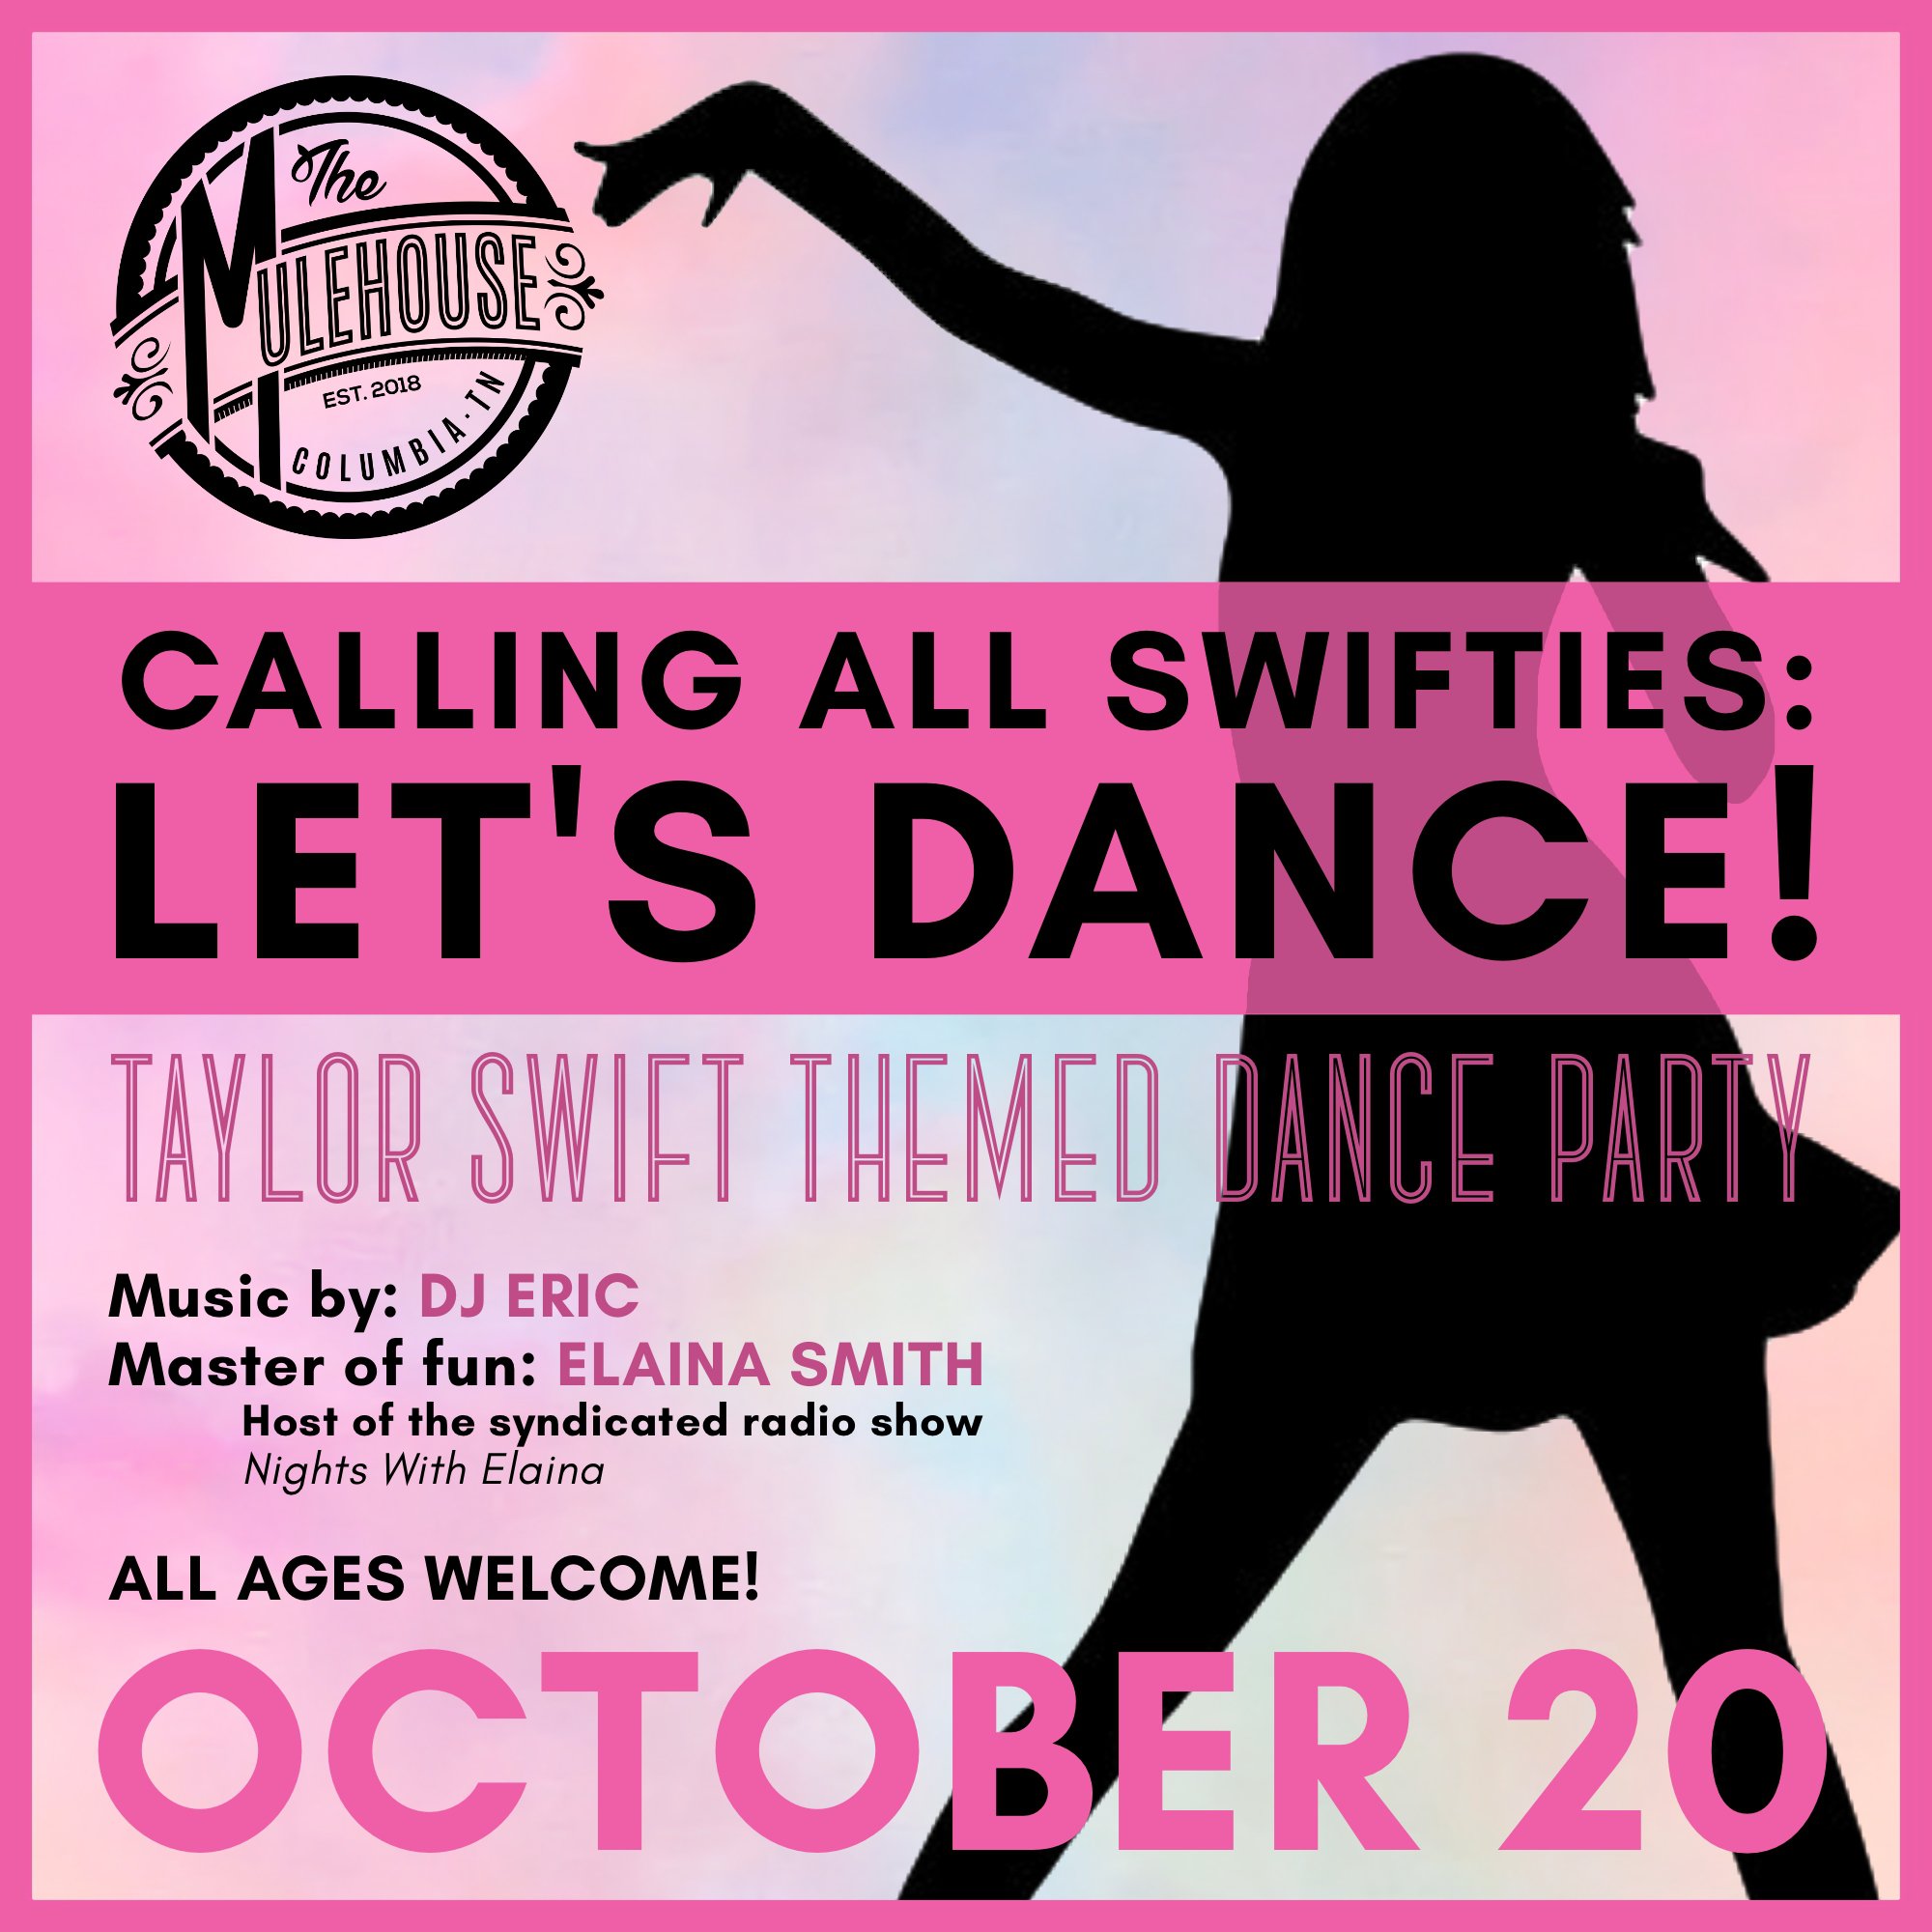 Swifties Dance Party! - Nashville Lifestyles